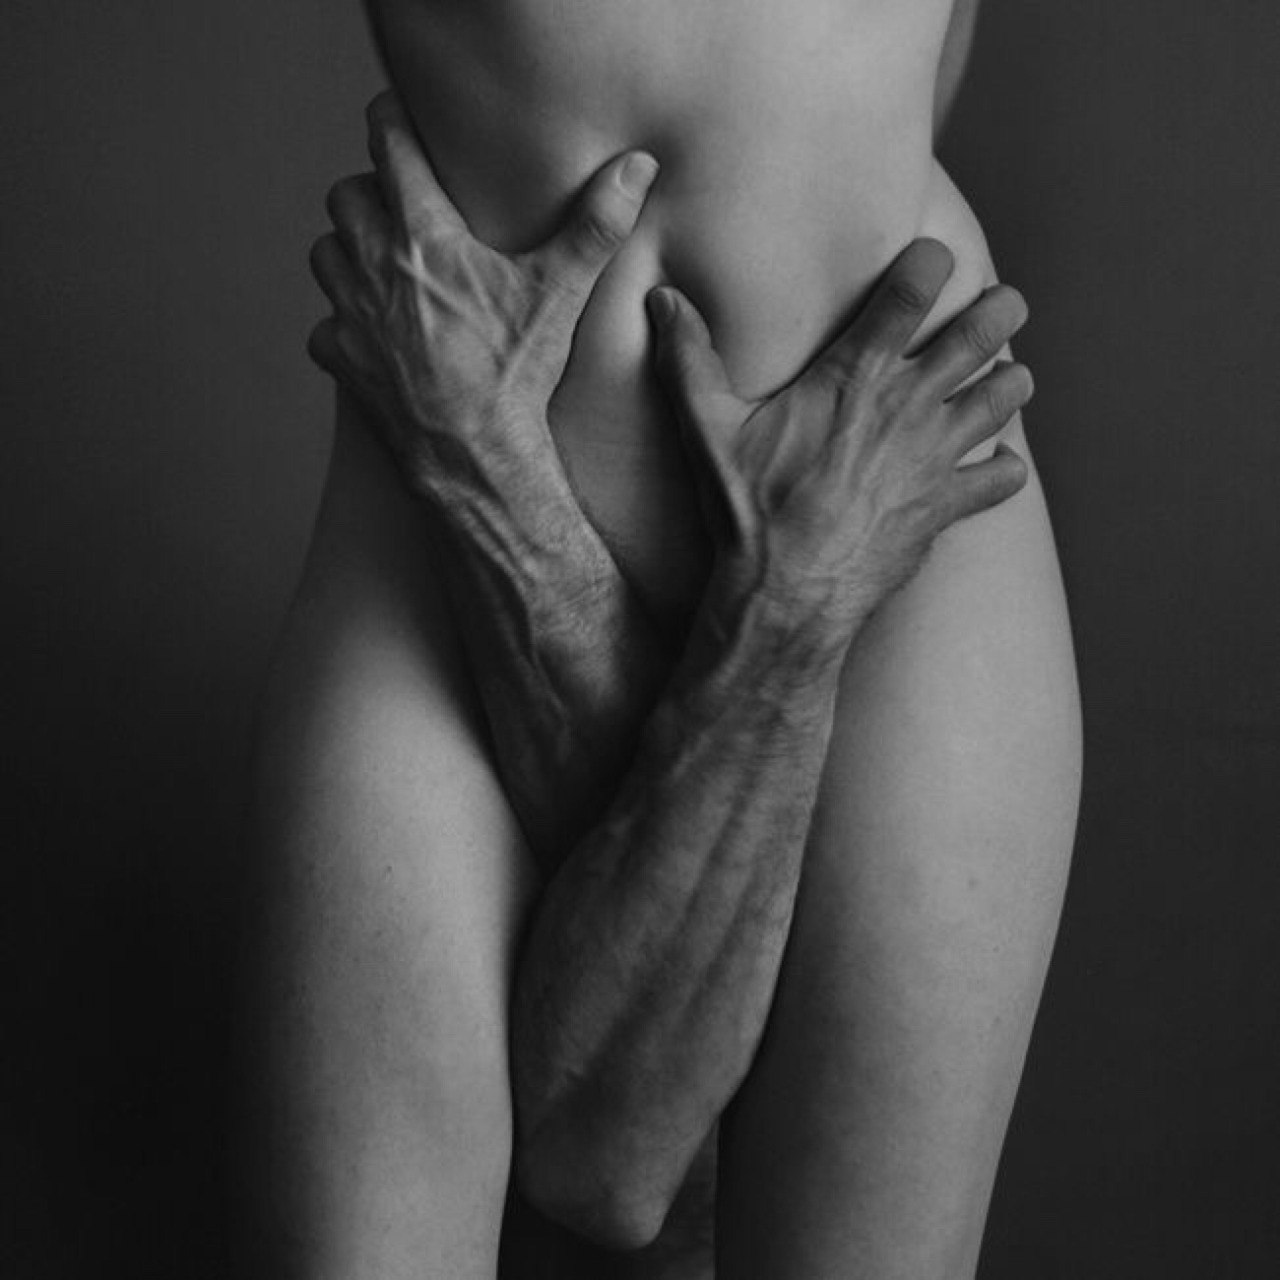 эротика рука в руке черно белое фото 22